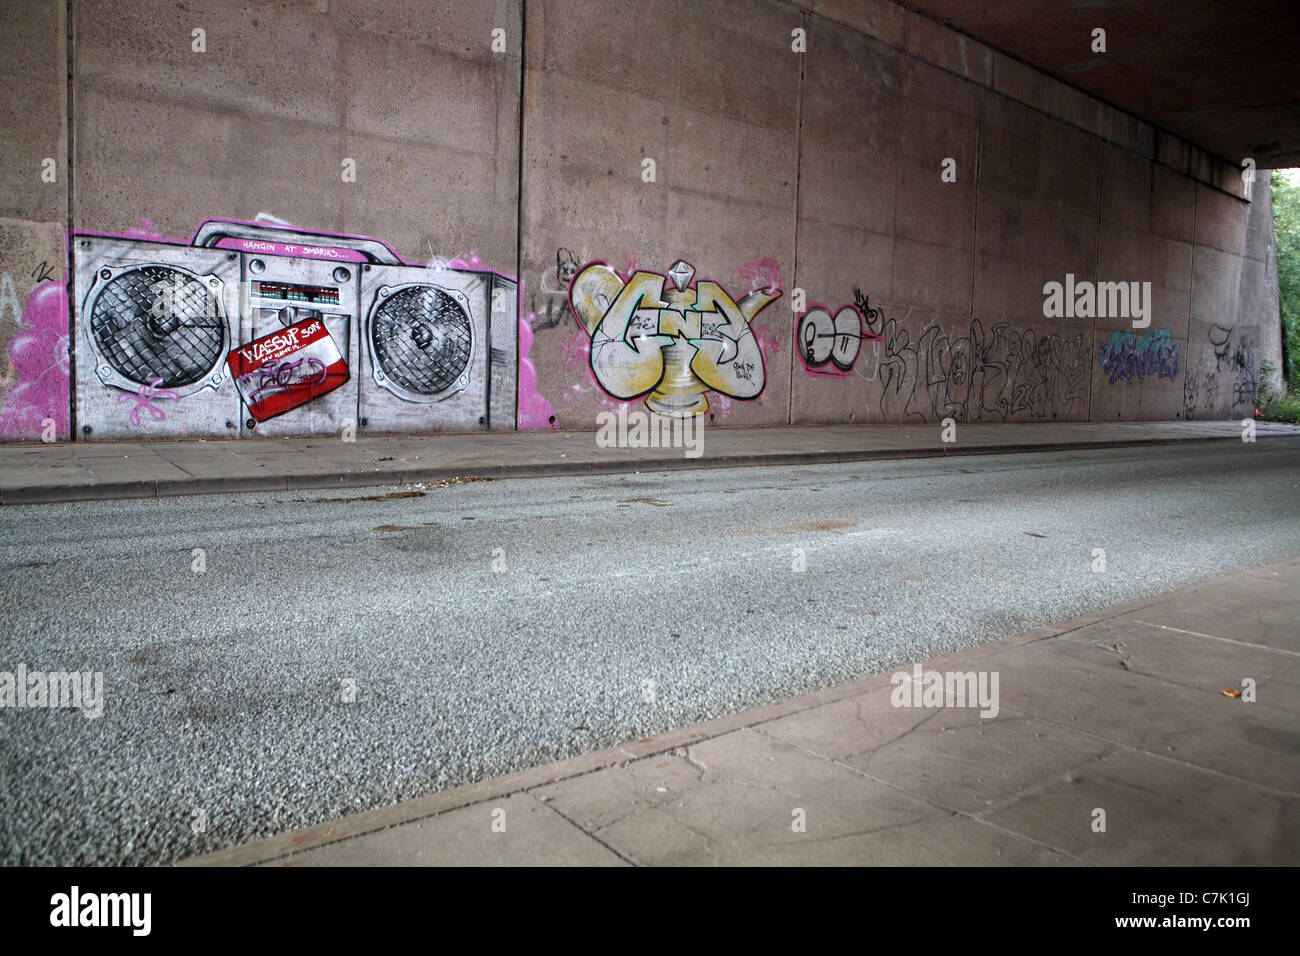 Underpass with graffiti Stock Photo